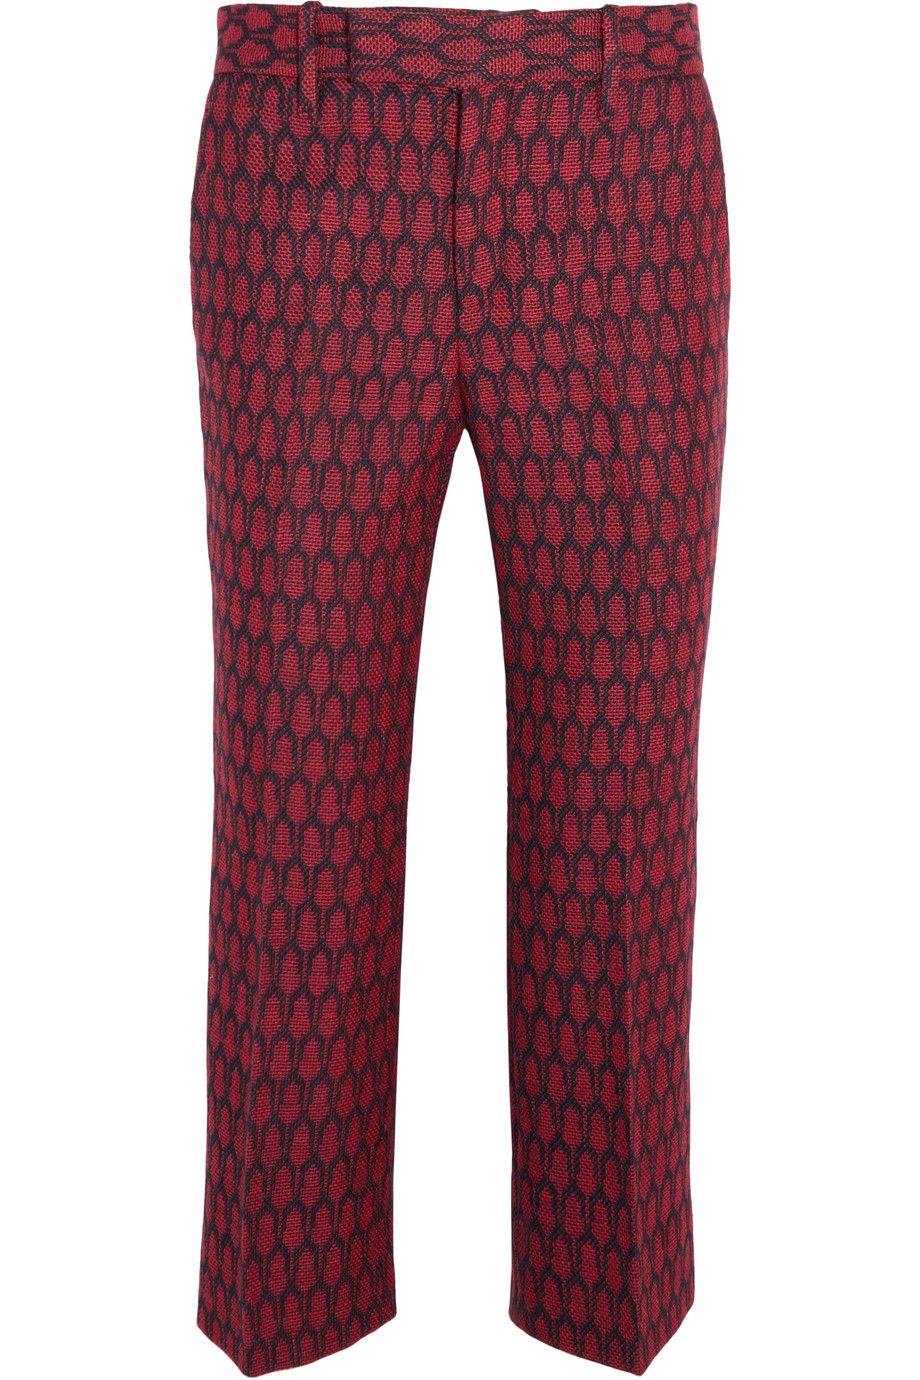 Red, Textile, Human leg, Pattern, Carmine, Maroon, Pocket, Waist, Thigh, Tights, 